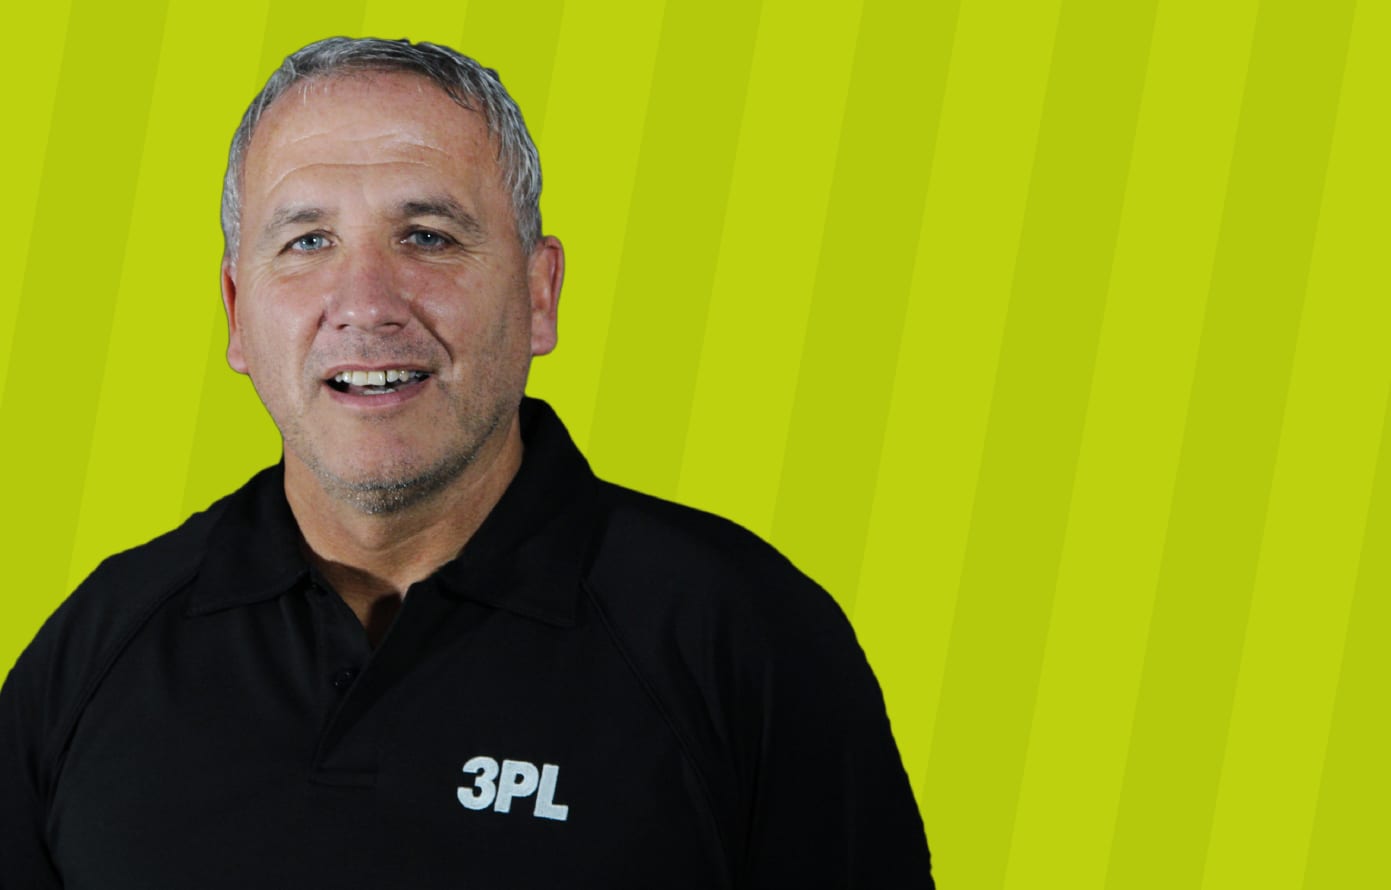 Inside 3PL: Meet Tony Barnes, Warehouse Manager